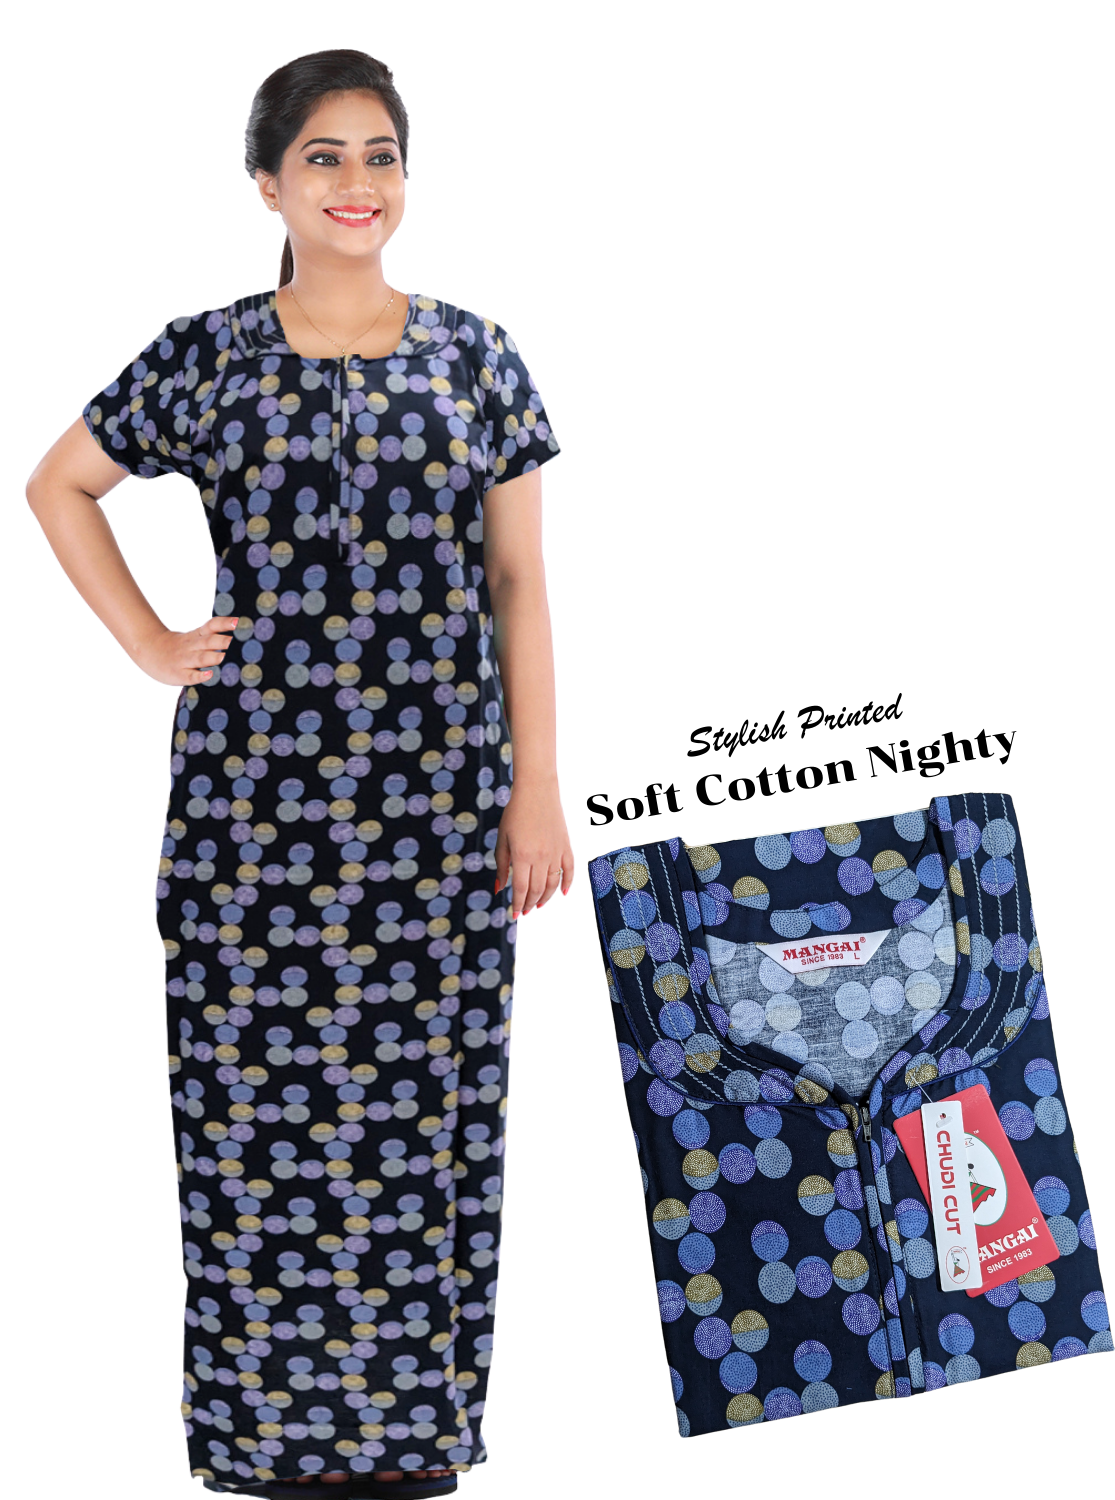 New MANGAI CHUDI Cut Cotton Nighties - All Over Printed Stylish Nightwear for Stylish Women | Beautiful Nighties for Stylish Women's | Shrinkage Free Cotton Nighties